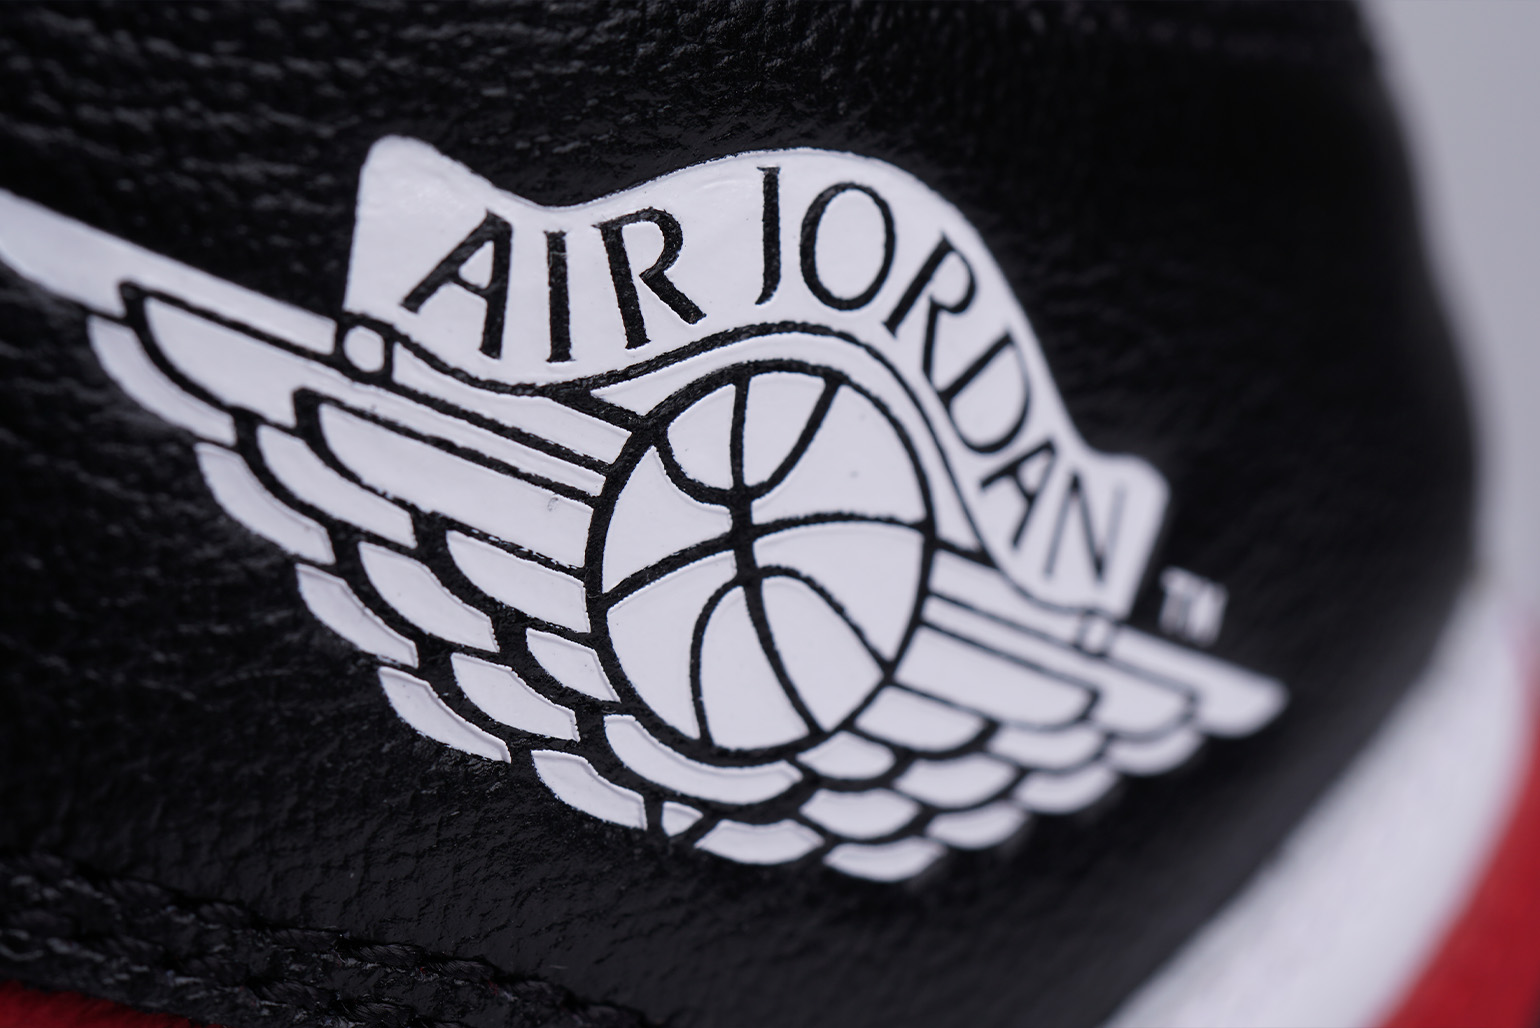 A world record-breaking sale of Michael Jordan’s sneakers for $3.3 million